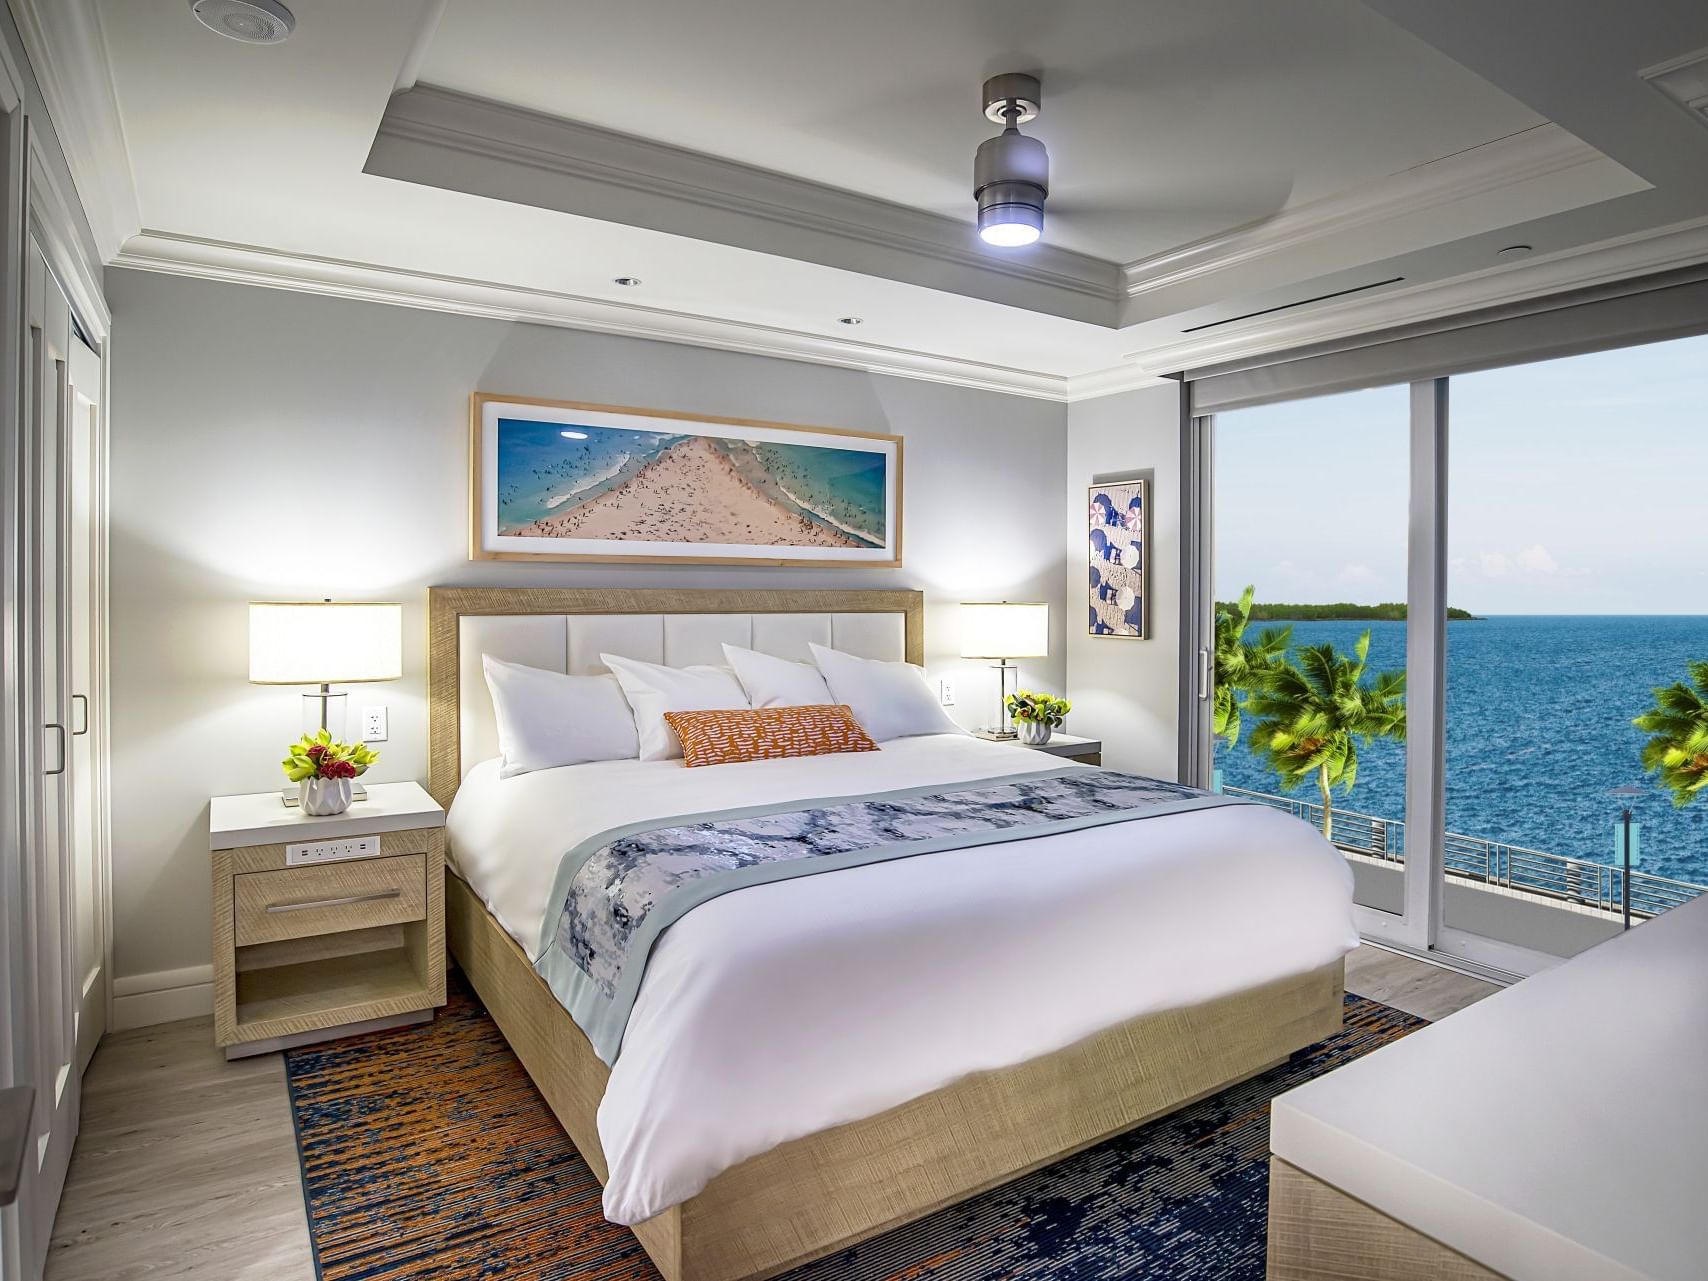 Interior of Sunsuites™ Two Bedroom at Sunseeker Resort